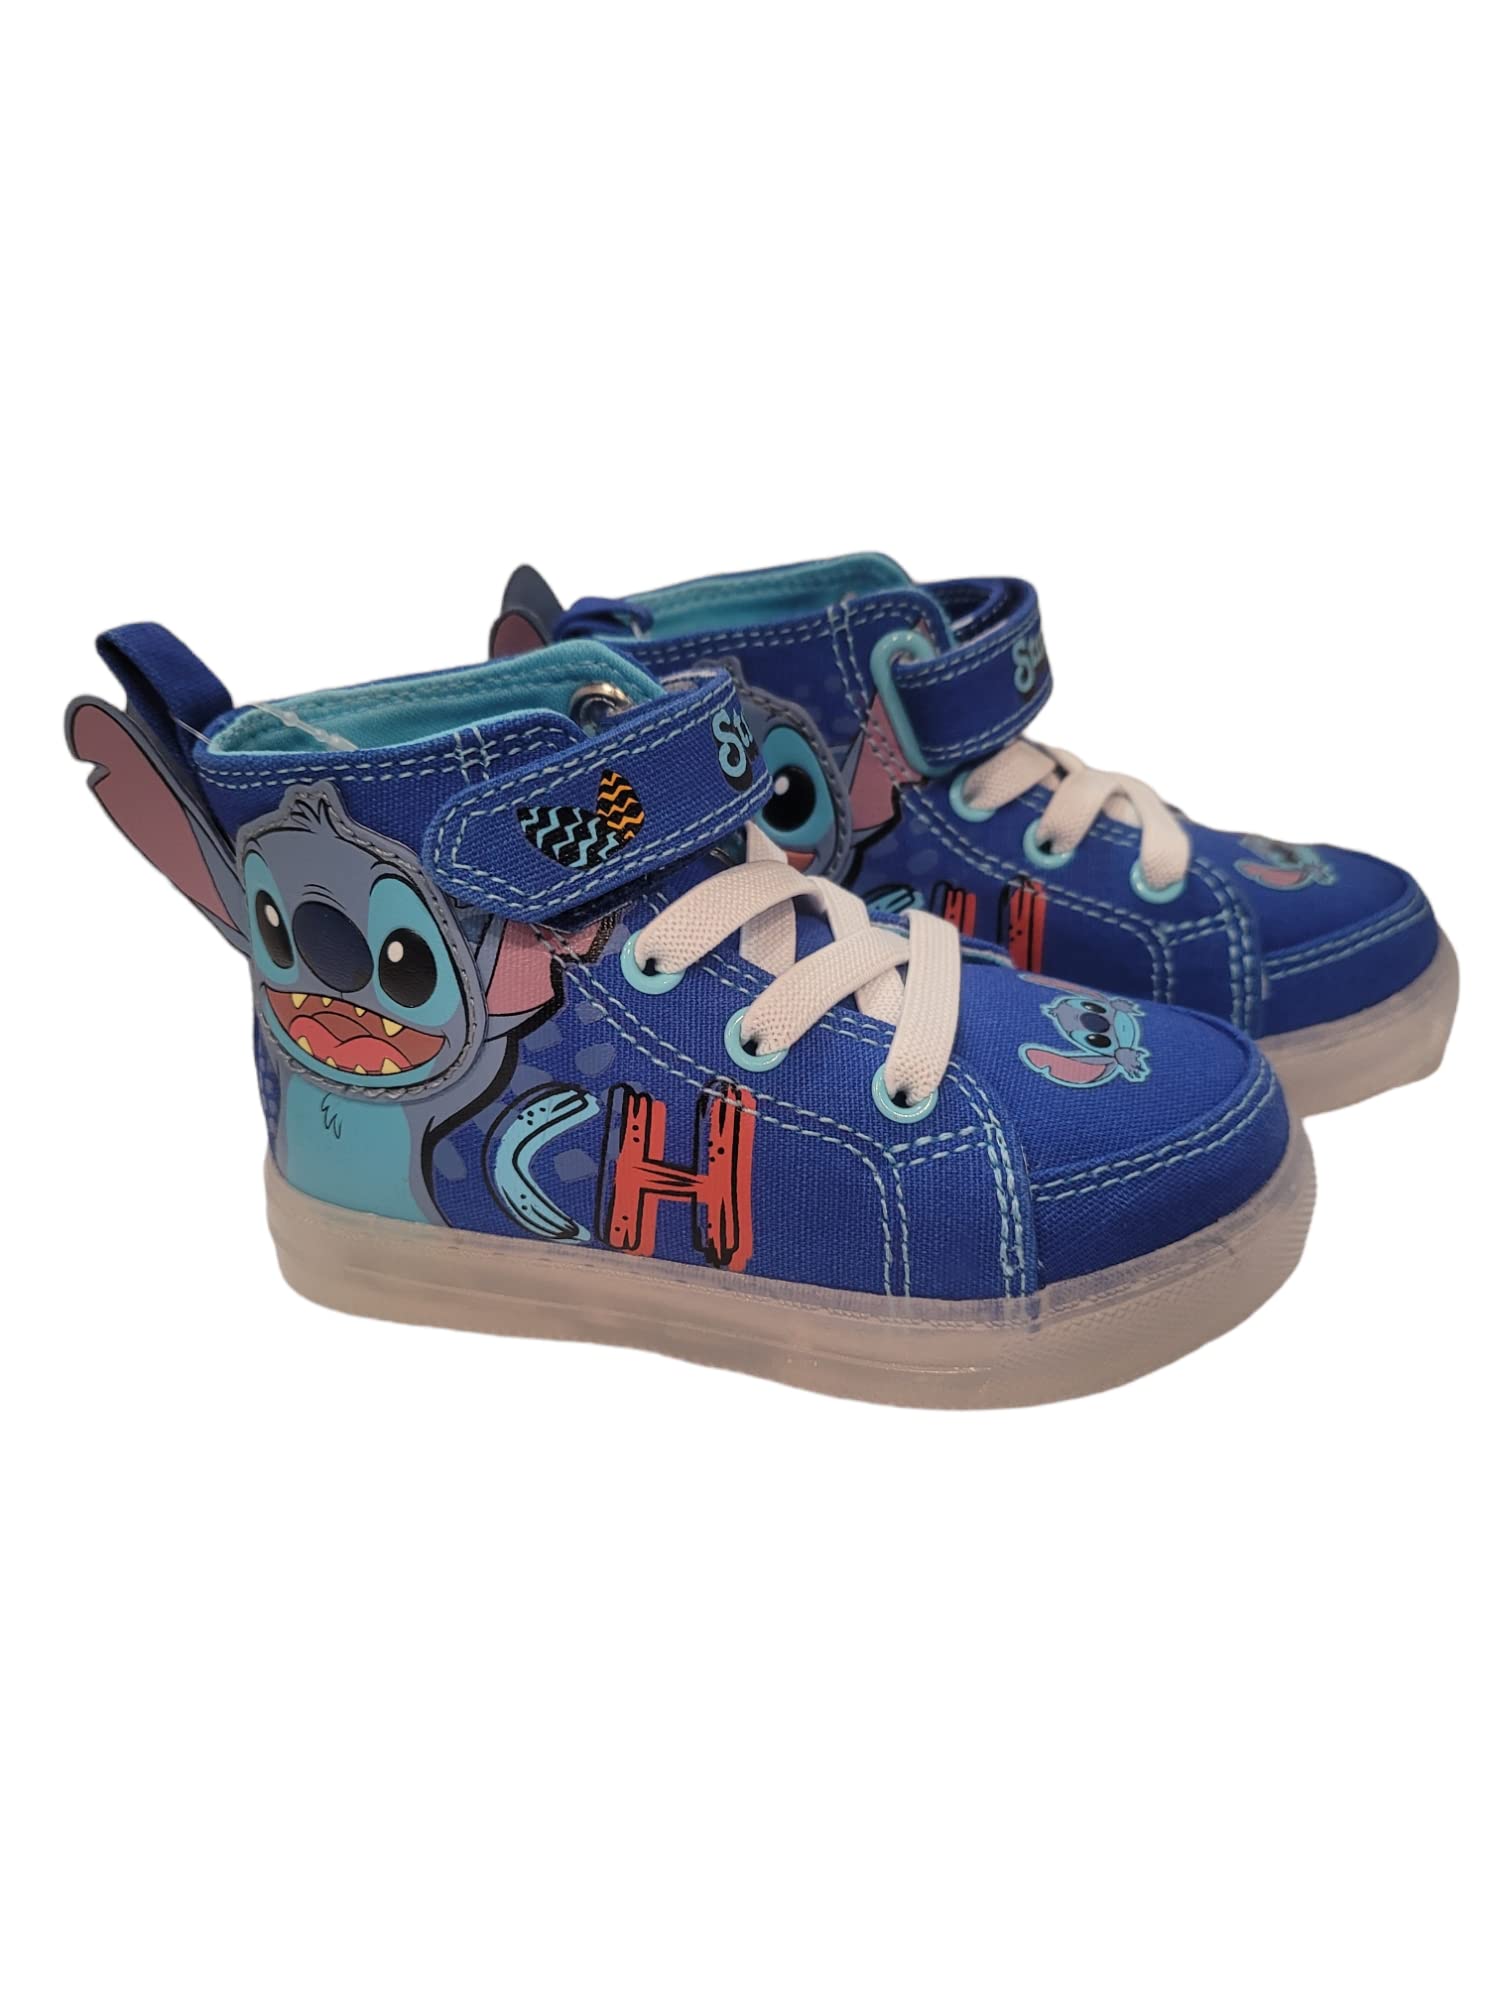 Kids Lilo and Stitch Shoes 